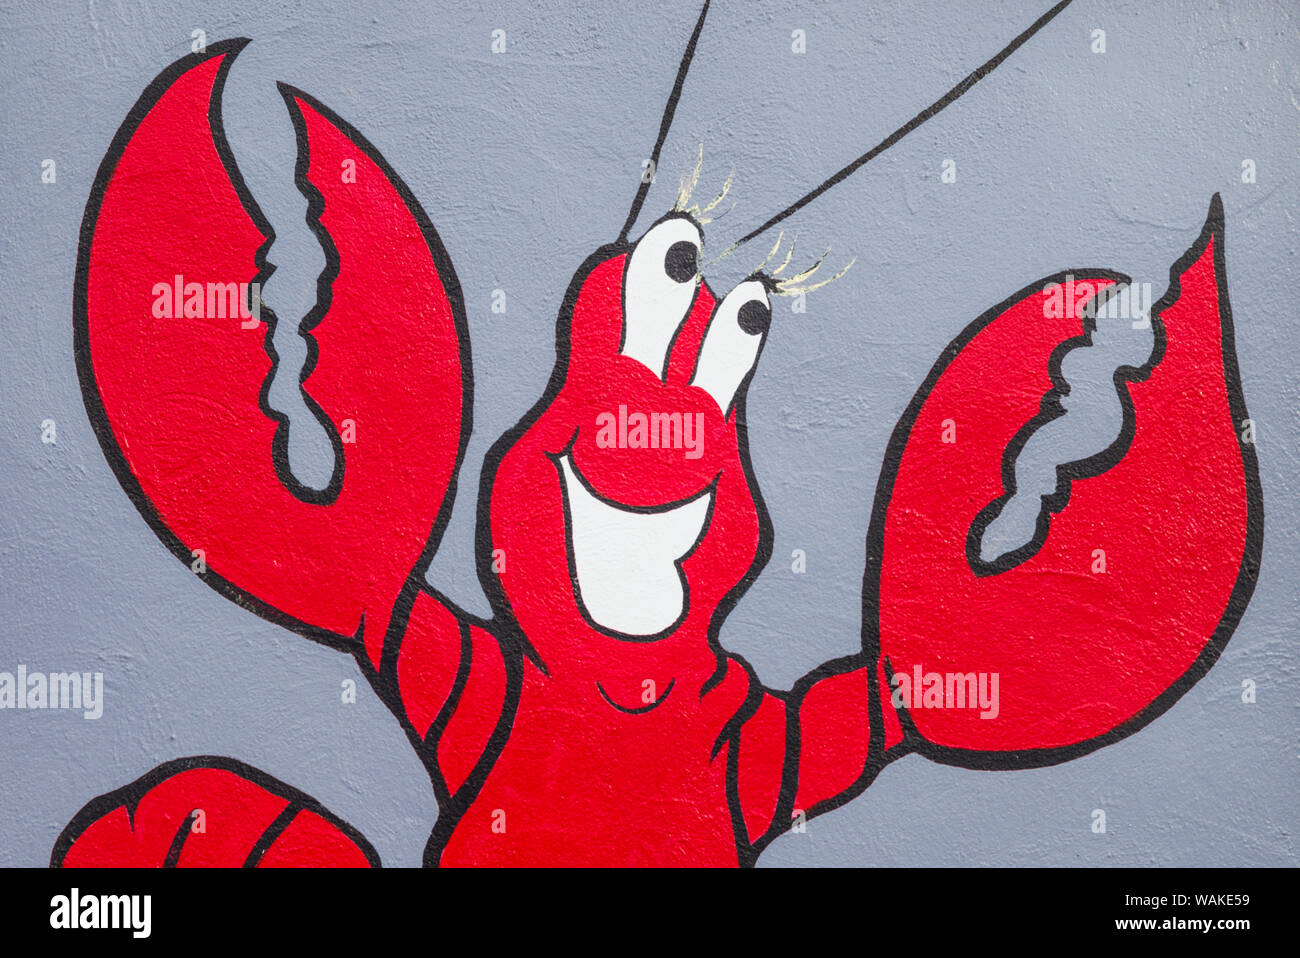 USA, New Jersey, Wildwoods. 1950's Doo-Wop architecture, happy lobster art Stock Photo